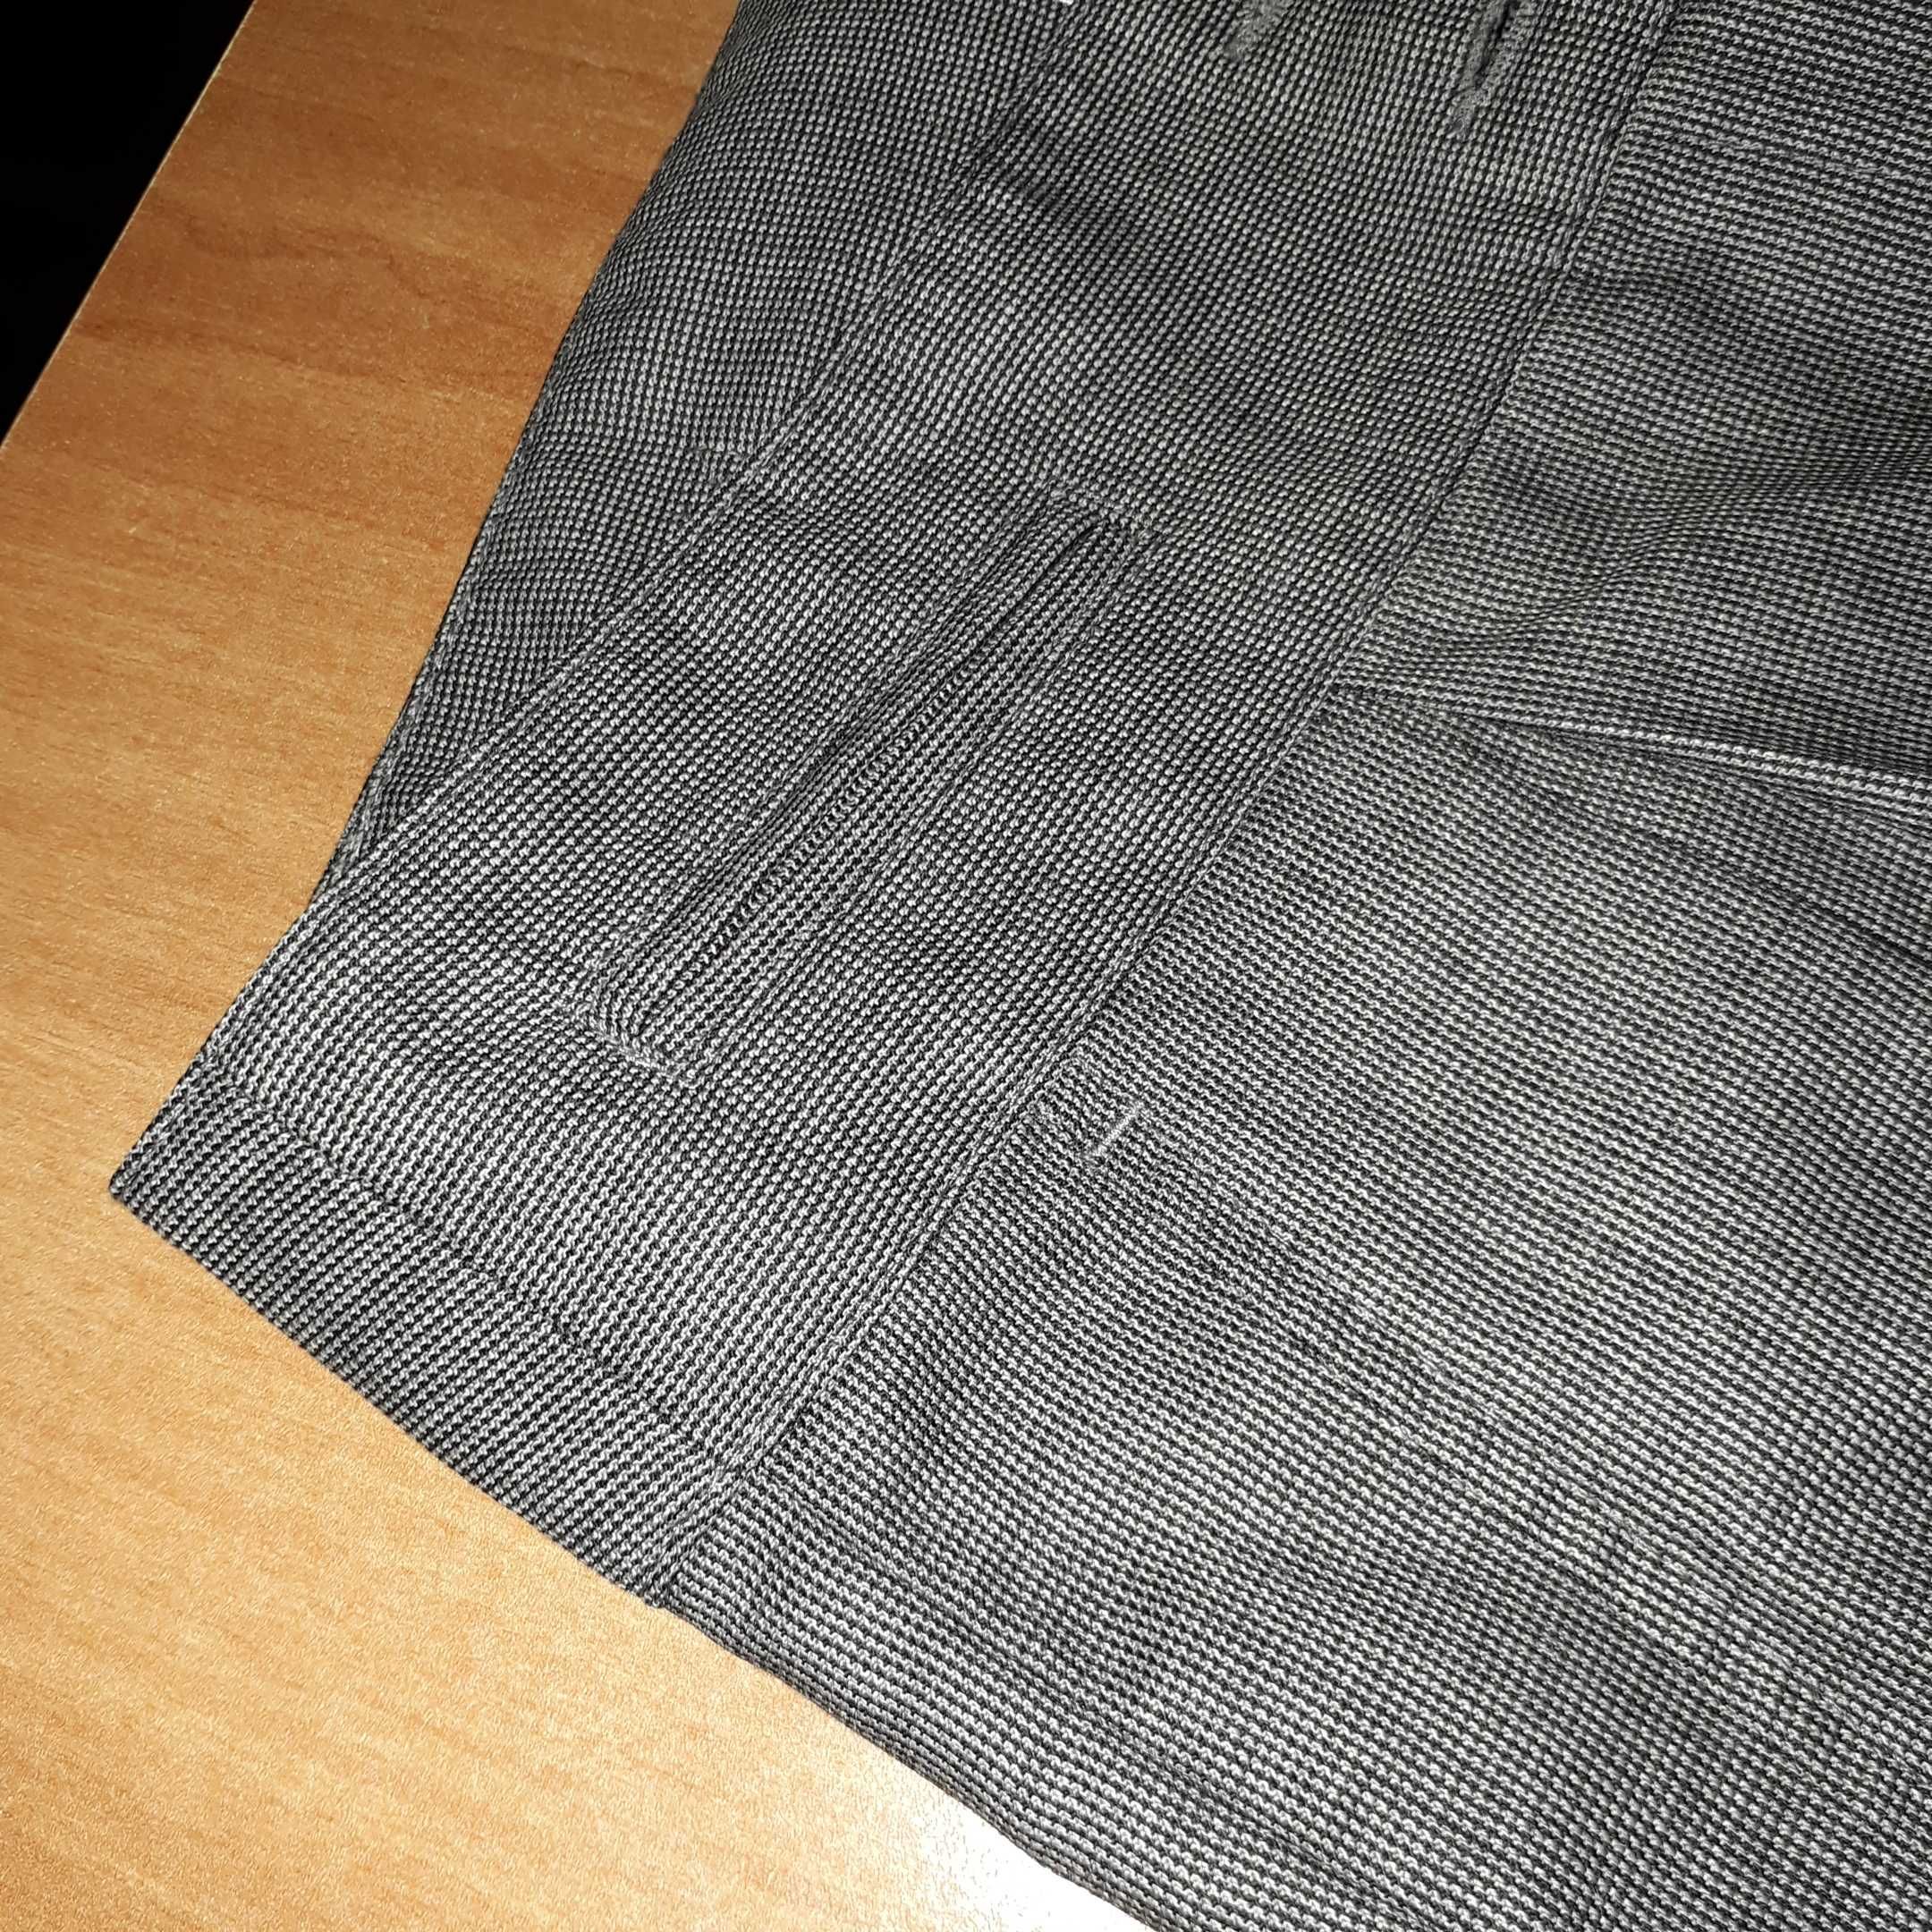 Женские шорты GAP wool blend р.48 US6 UK10 F40